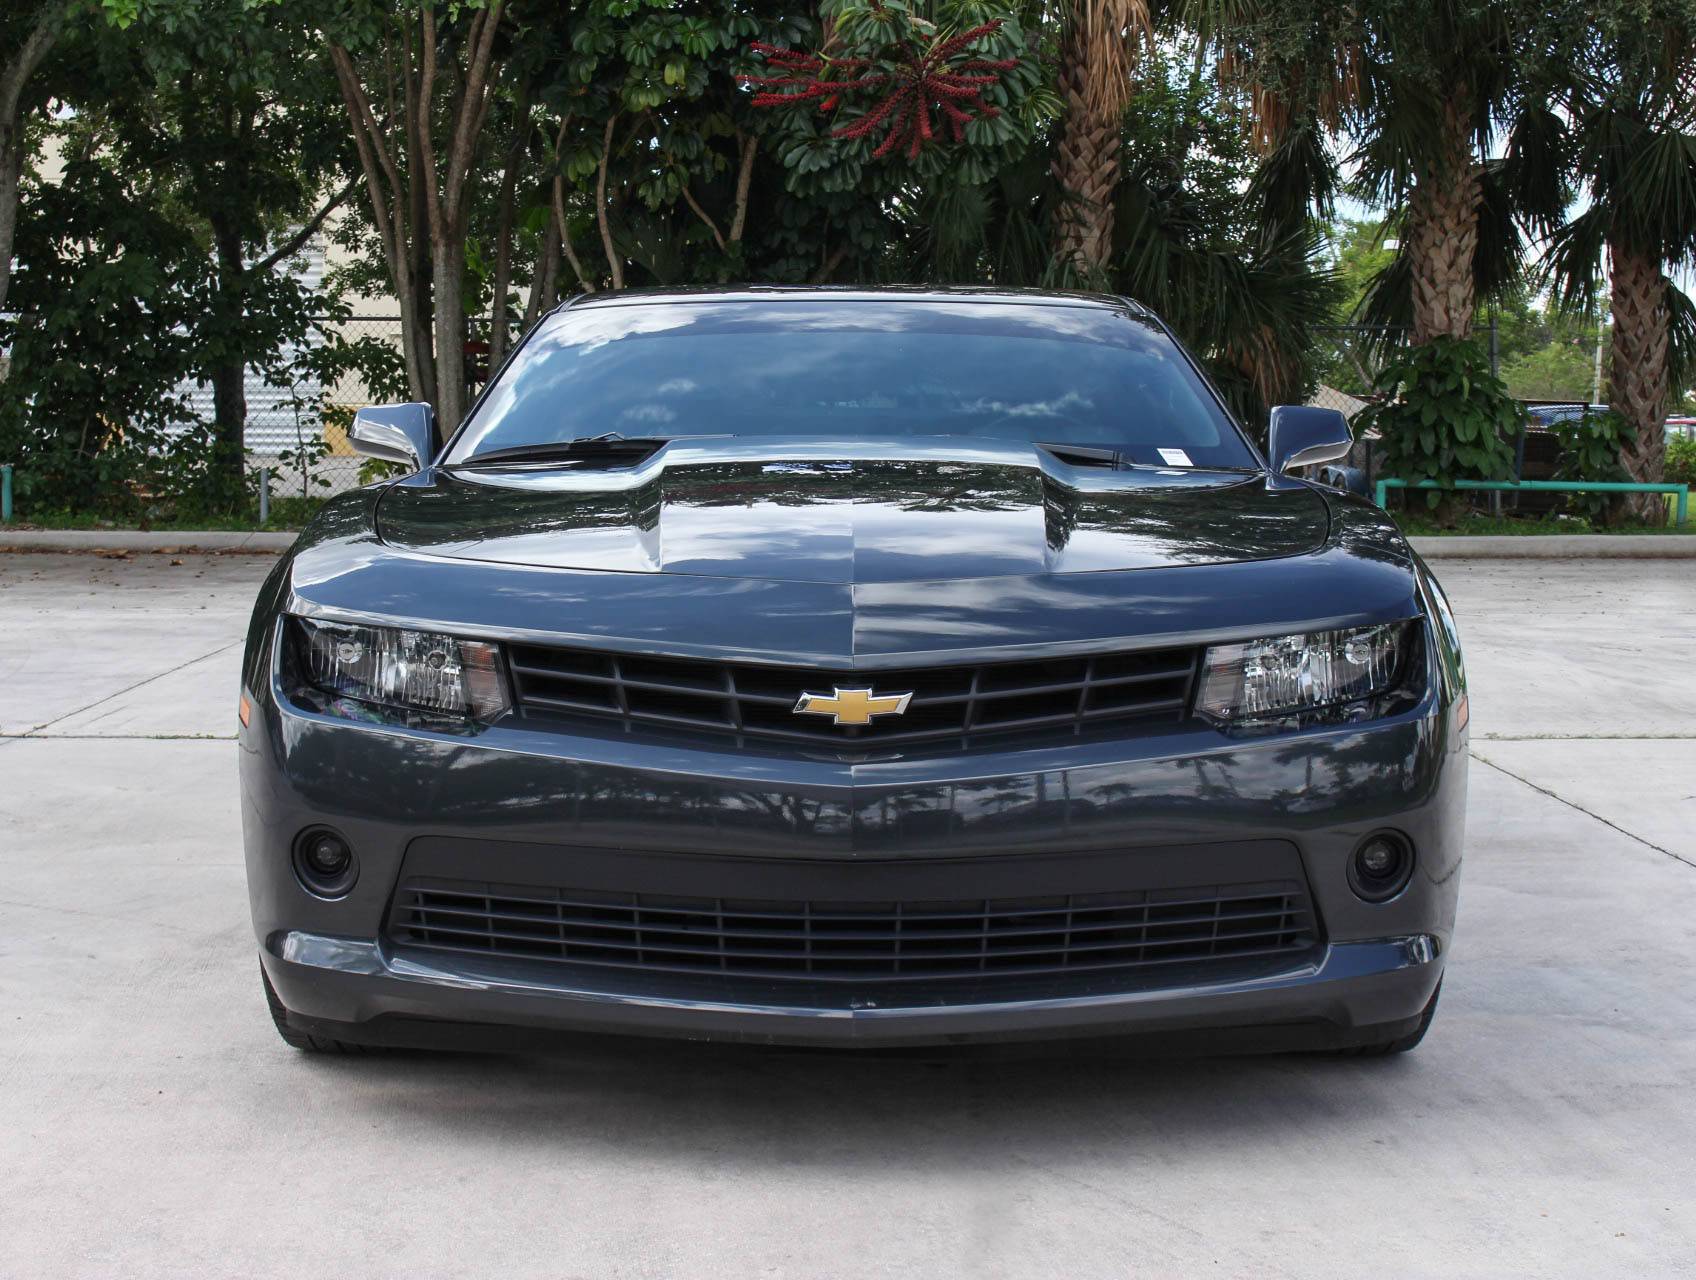 Florida Fine Cars - Used CHEVROLET CAMARO 2015 MARGATE 2LT